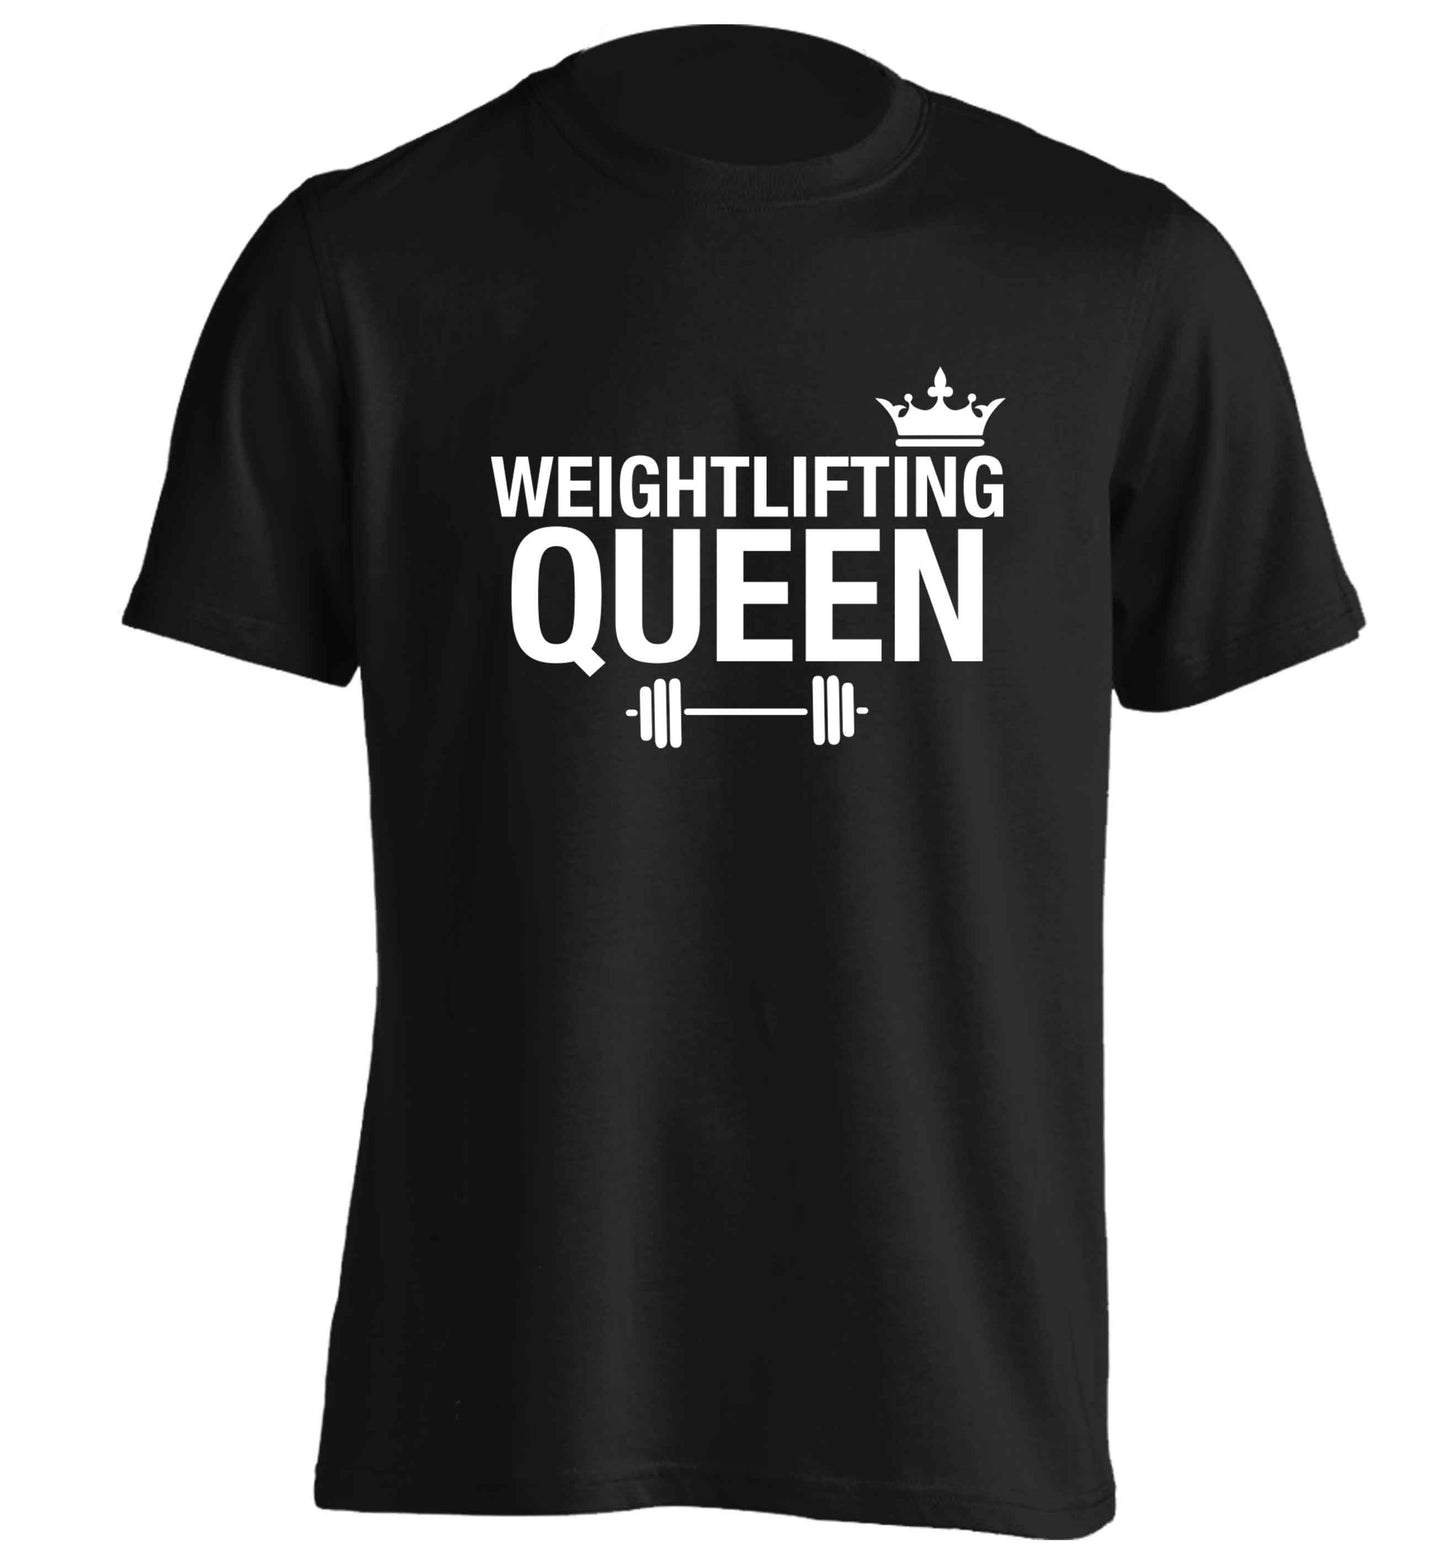 Weightlifting Queen adults unisex black Tshirt 2XL